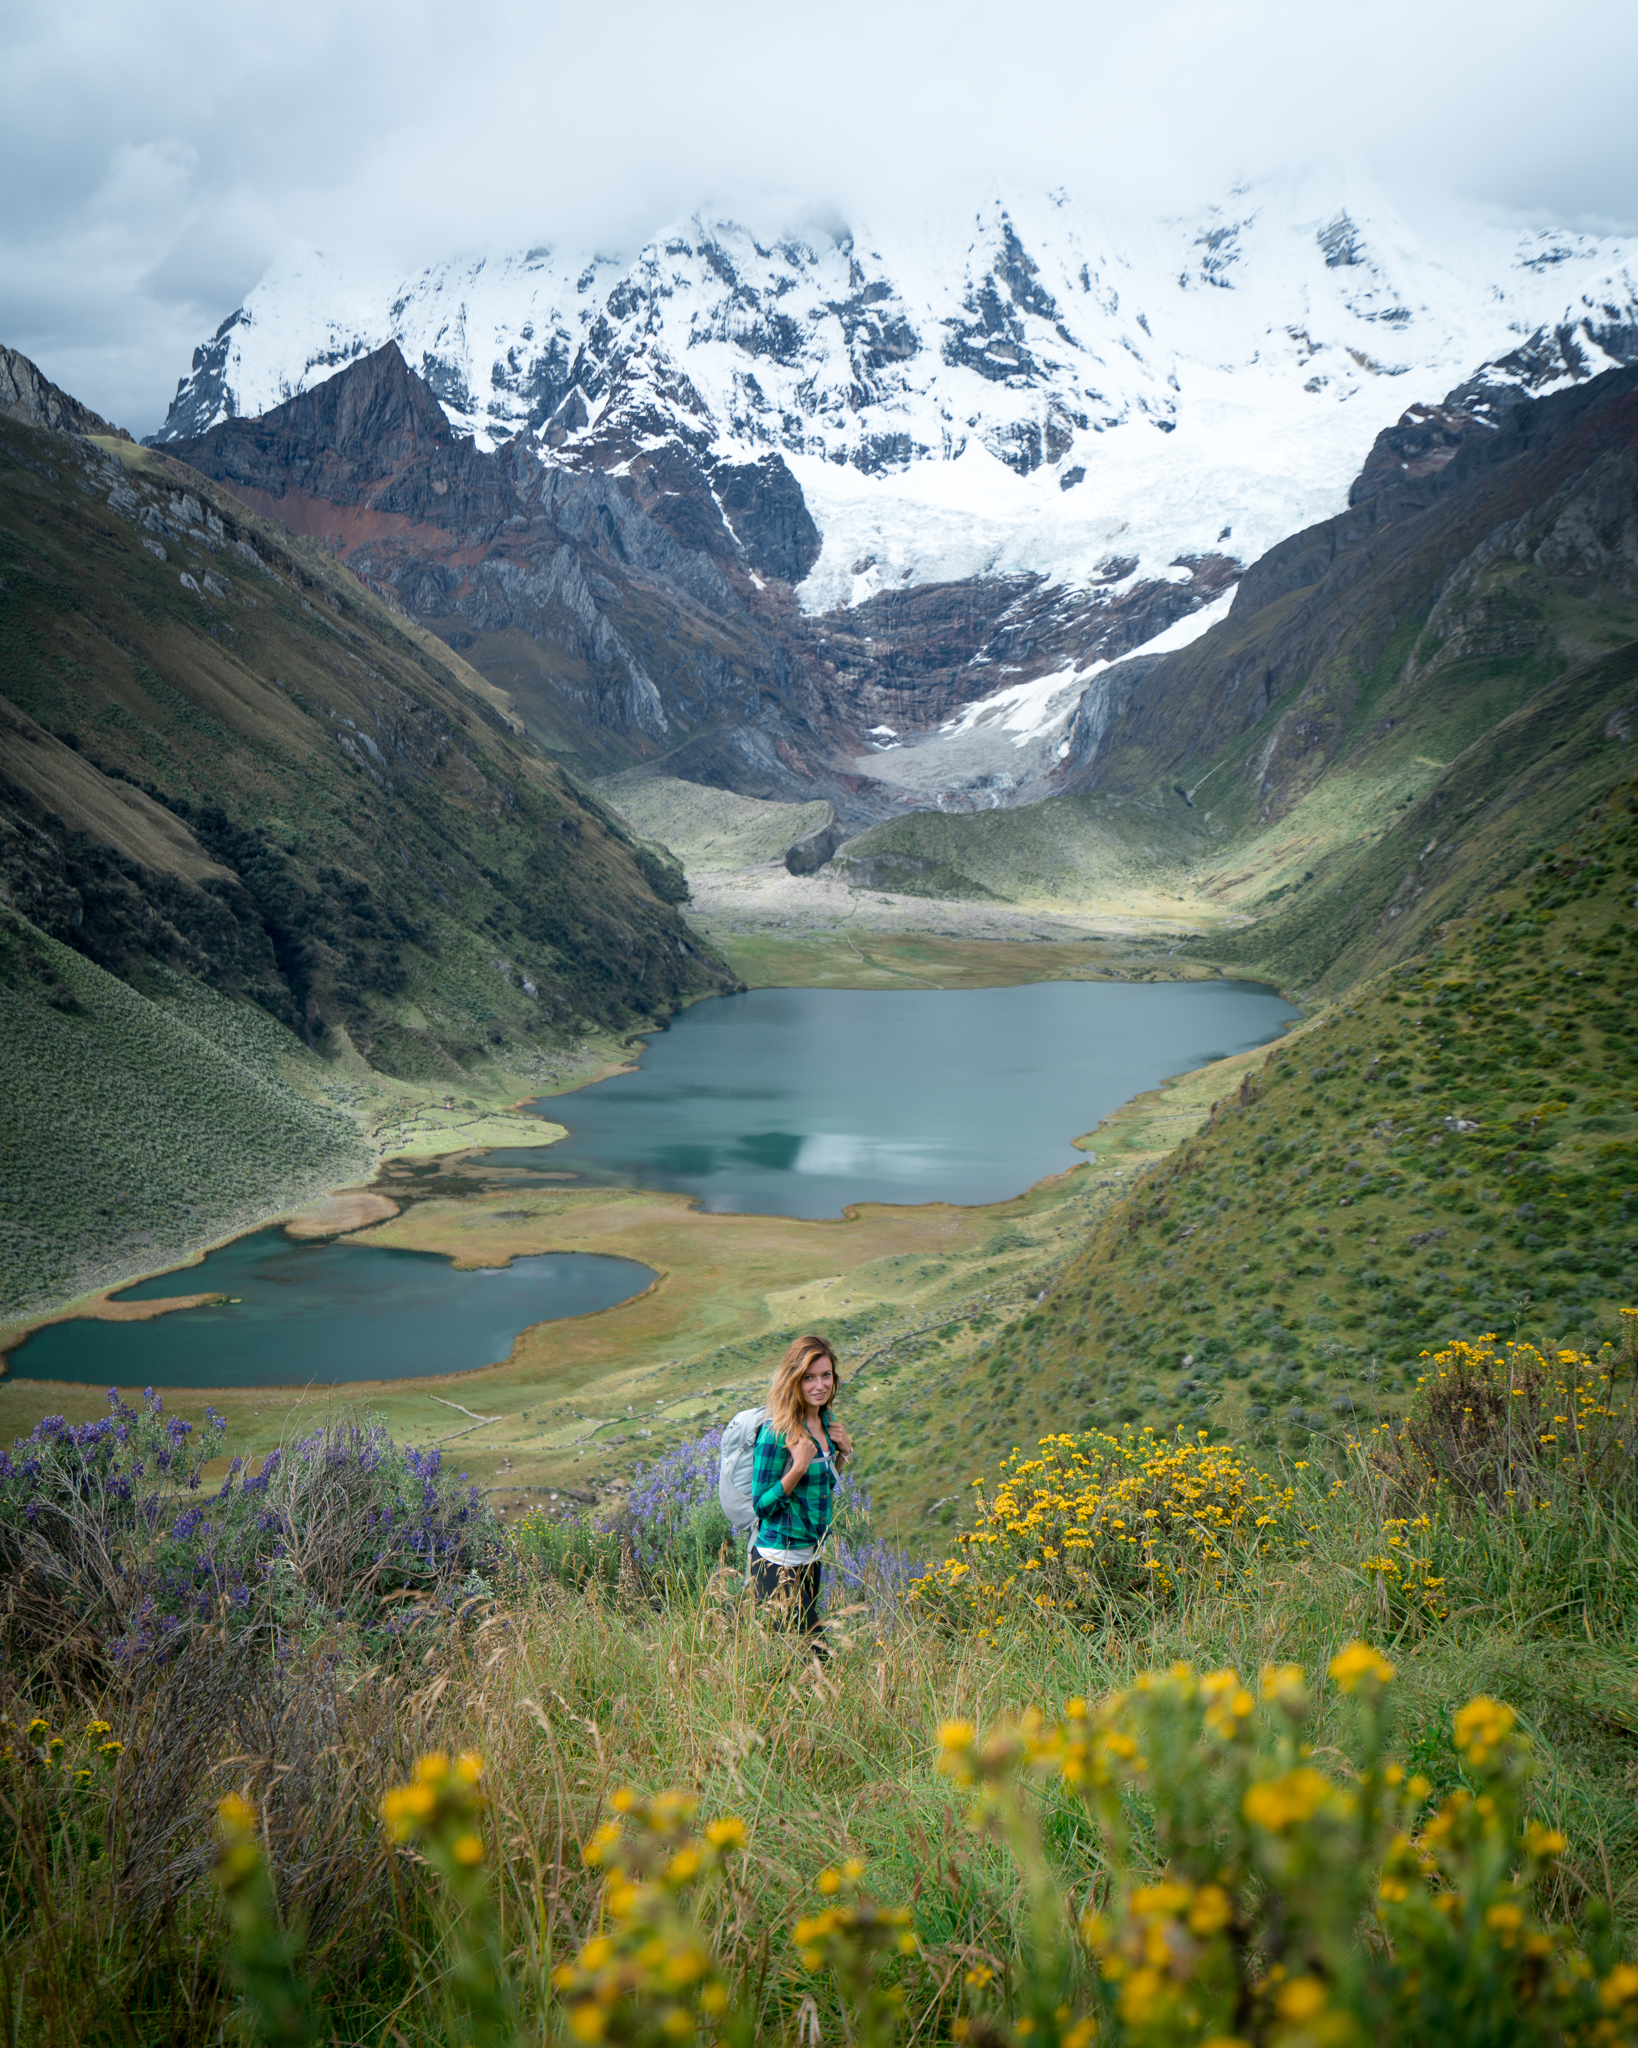 Views from the trail on the Cordillera Huayhuash Trek in Peru.